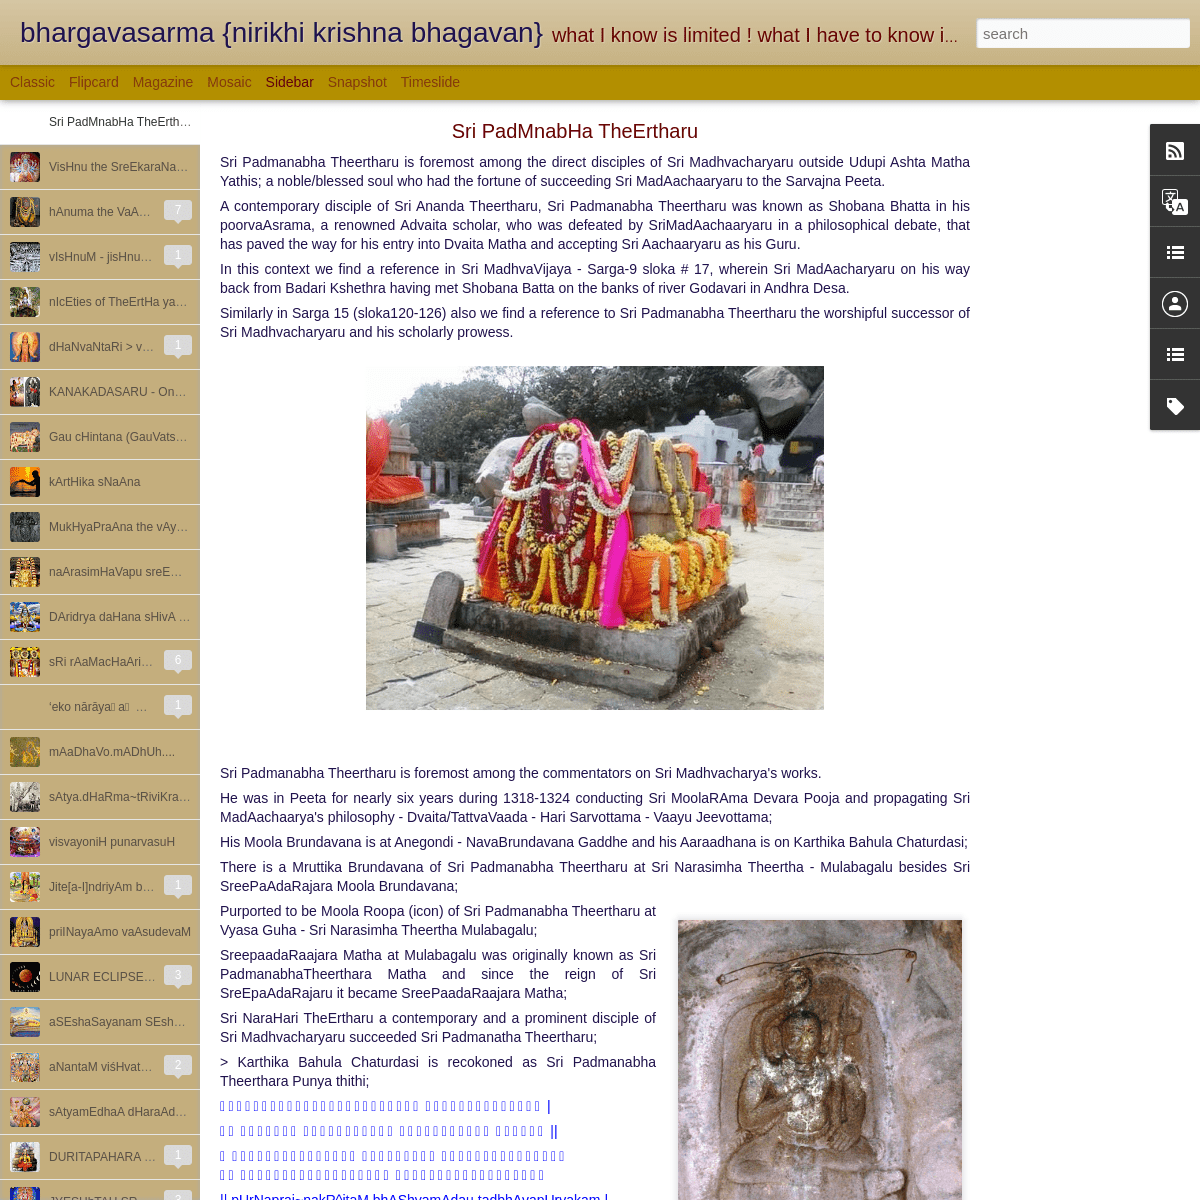 A complete backup of bhargavasarma.blogspot.com